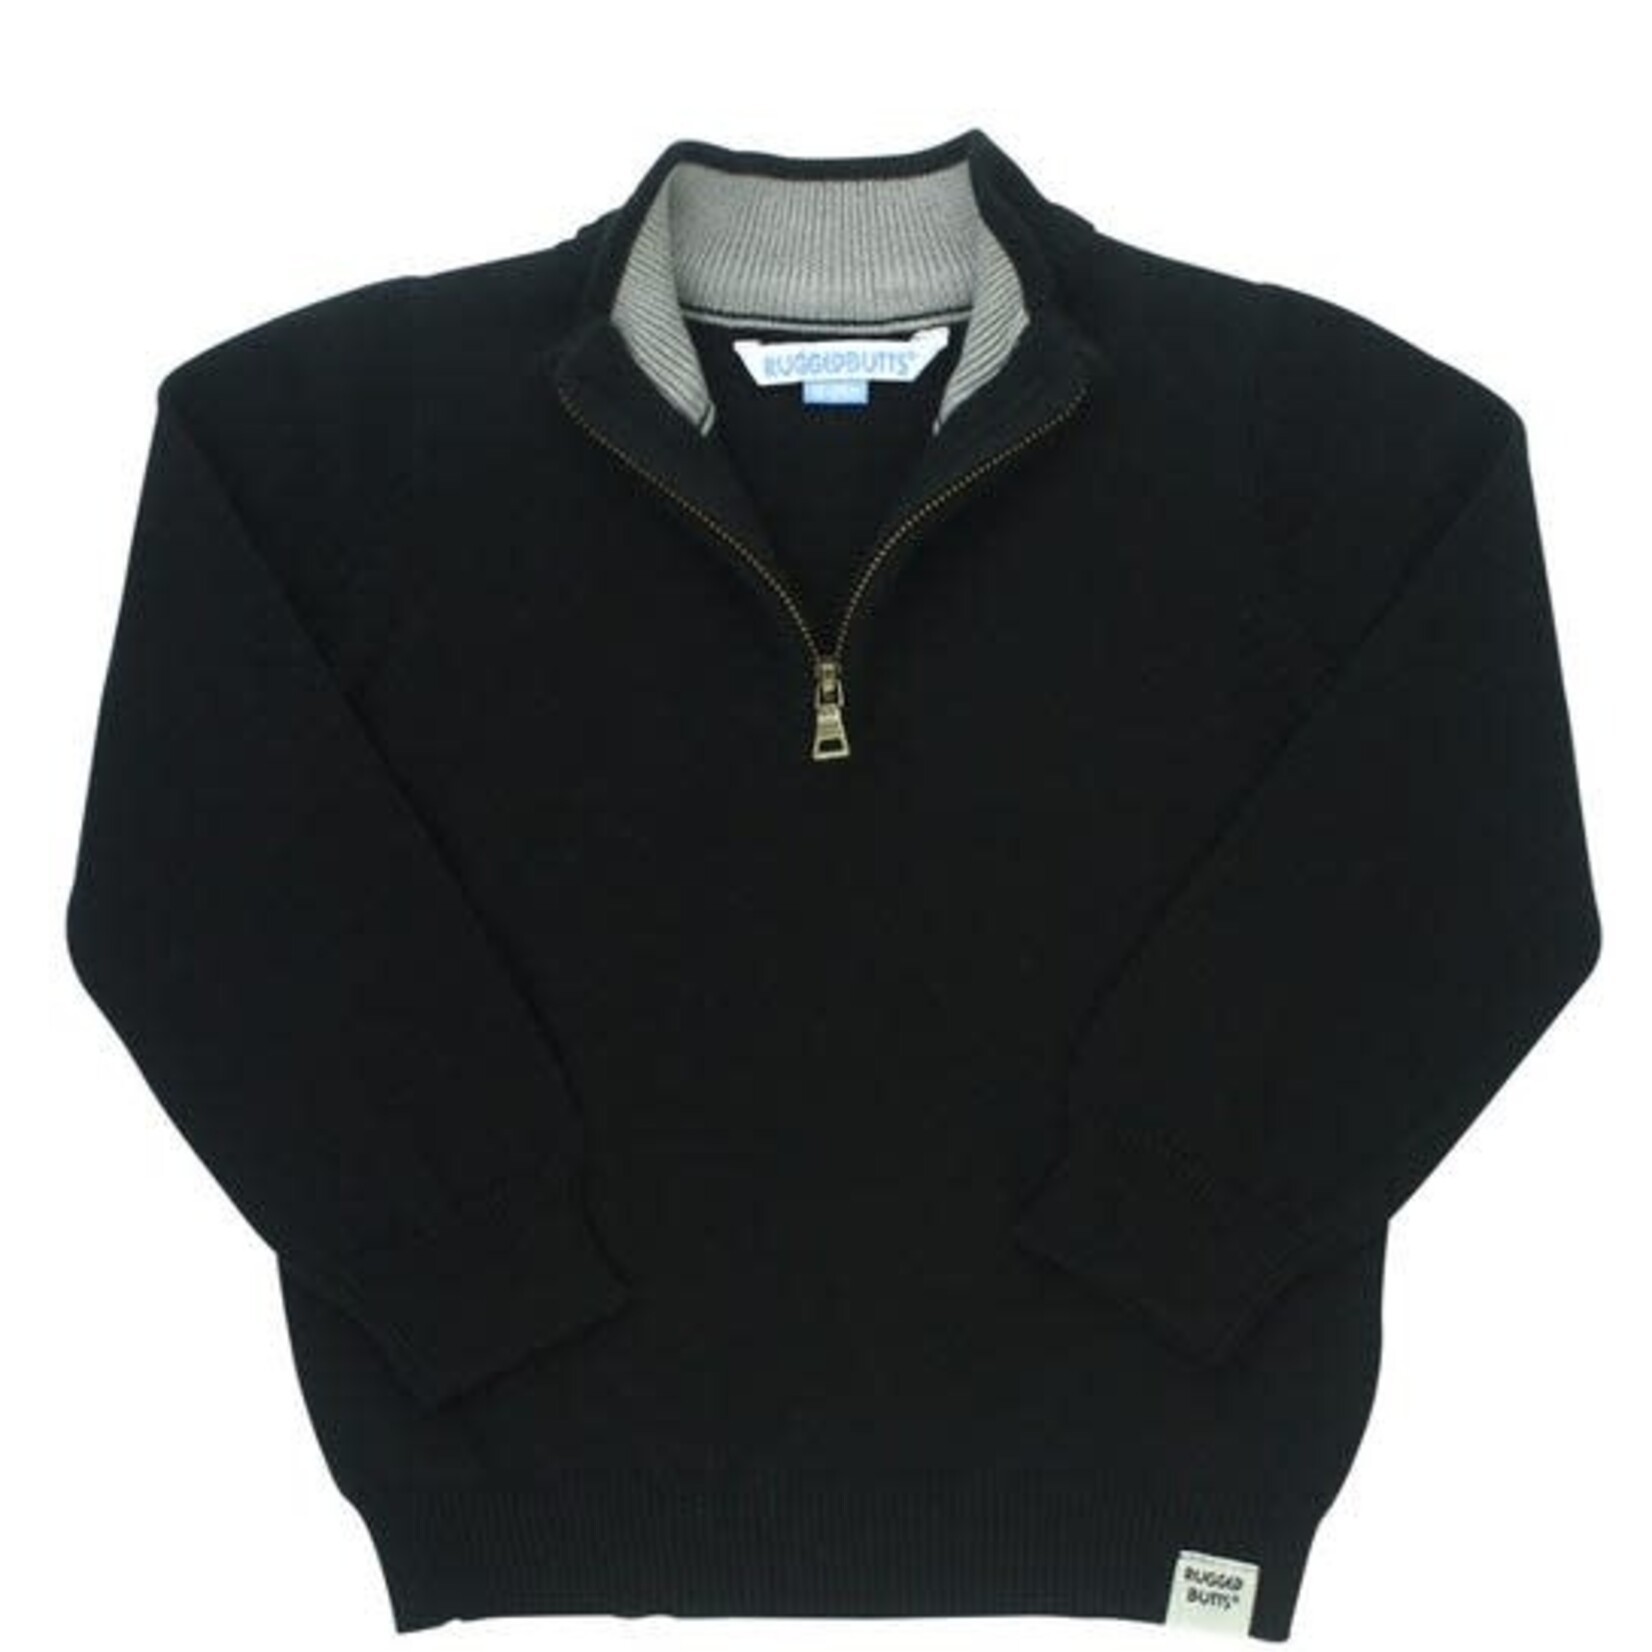 RuggedButts Black Quarter Zip Sweater - Baby